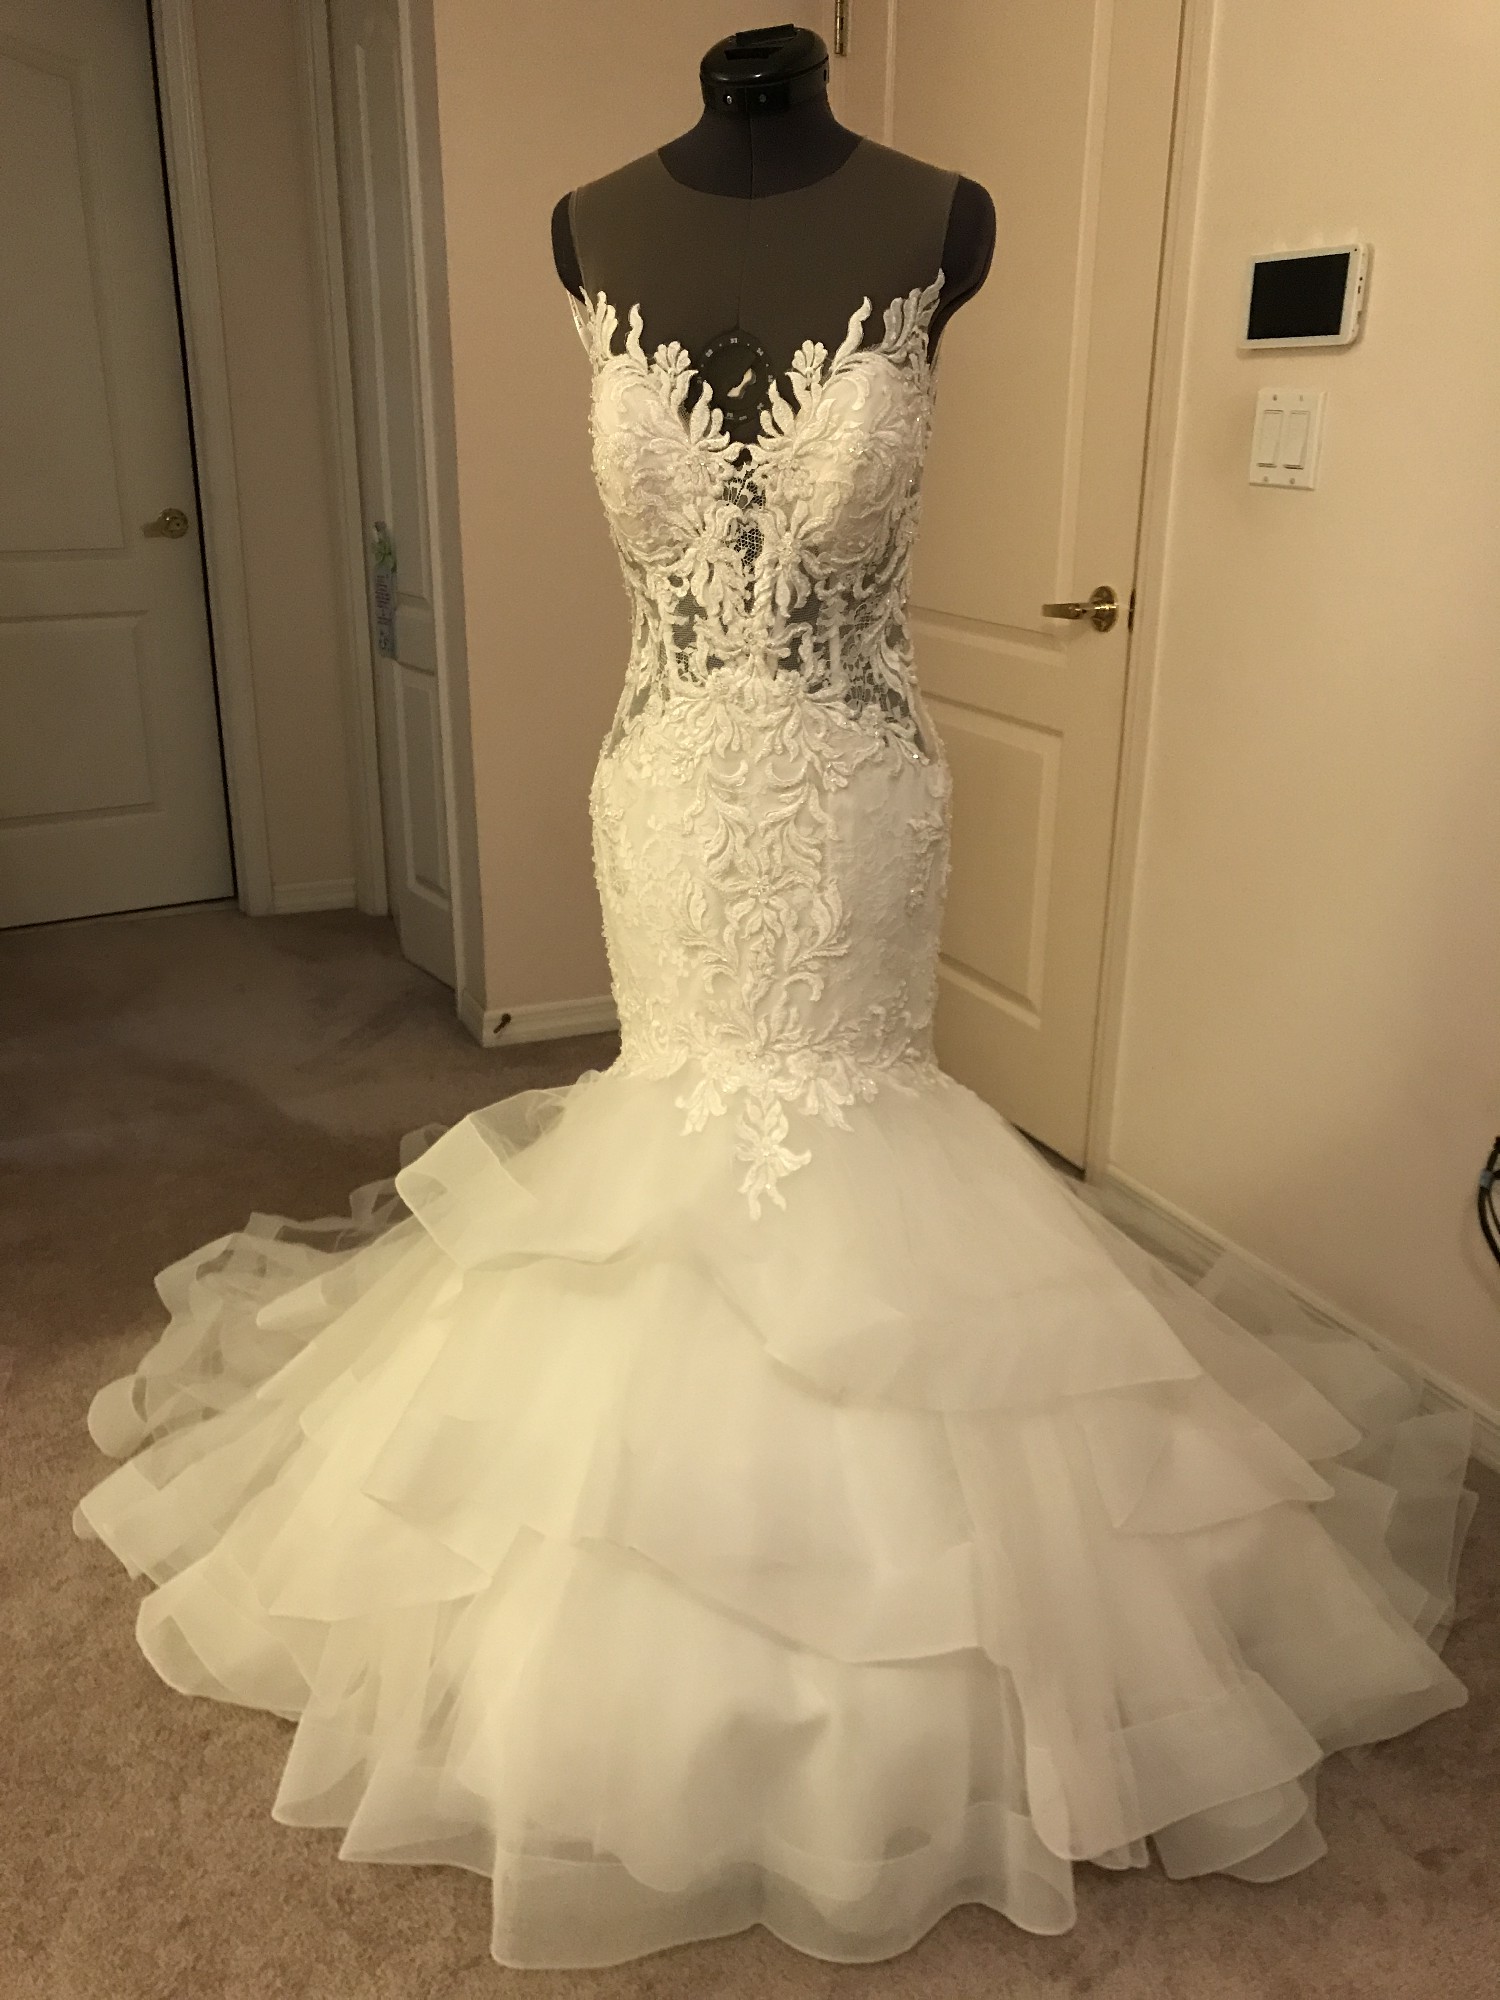 randy fenoli wedding dresses